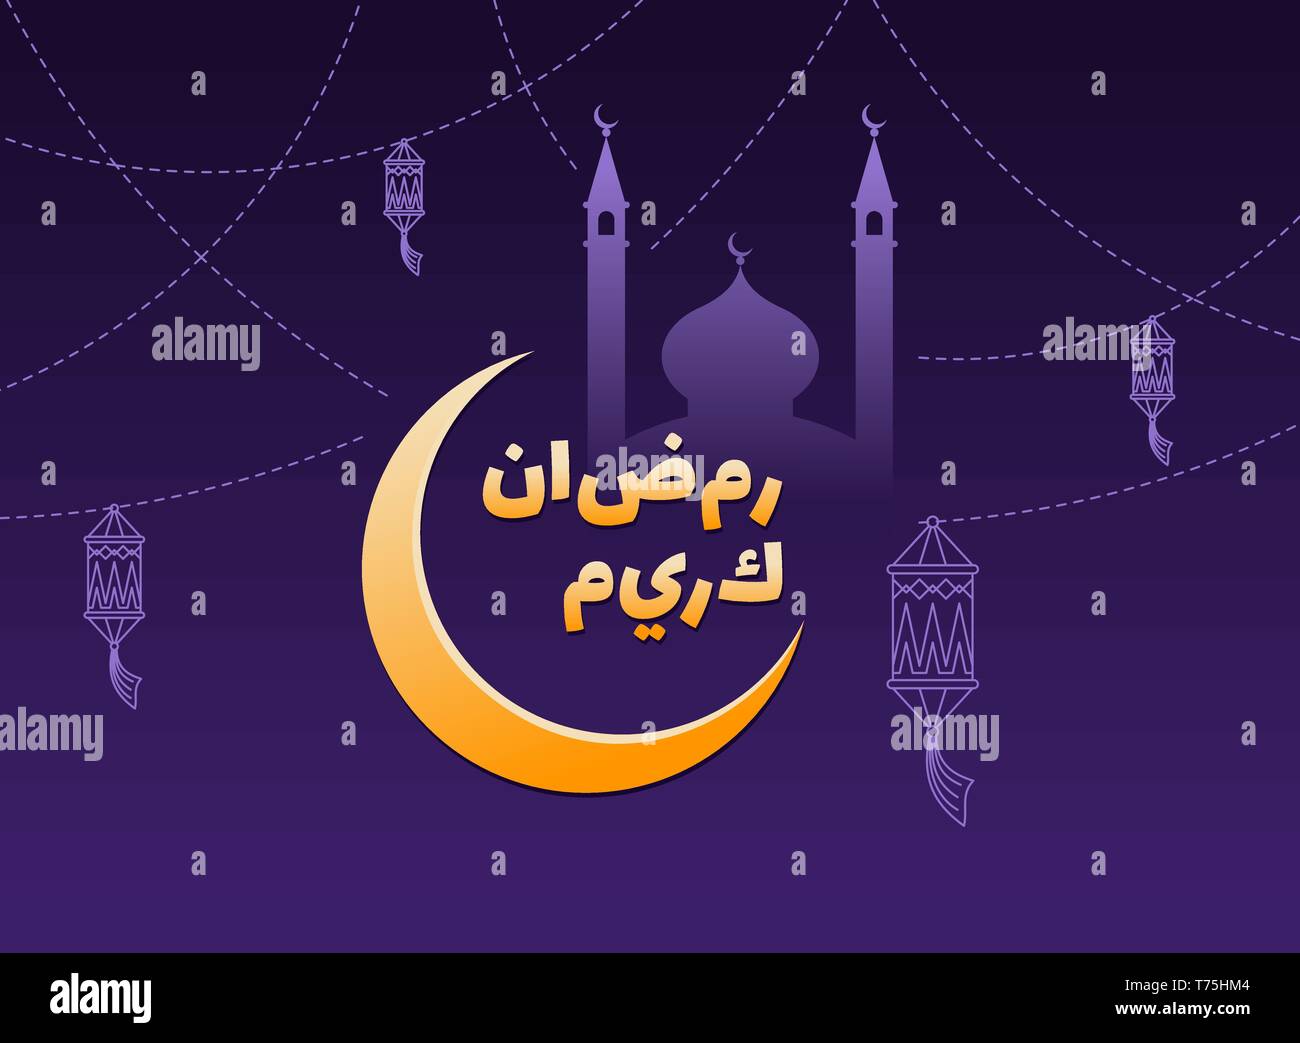 Ramadan Kareem words in arabic on purple background with moon, lantern, mosque. Islamic Ramadan mubarak greeting card, invitation for muslim community Stock Vector